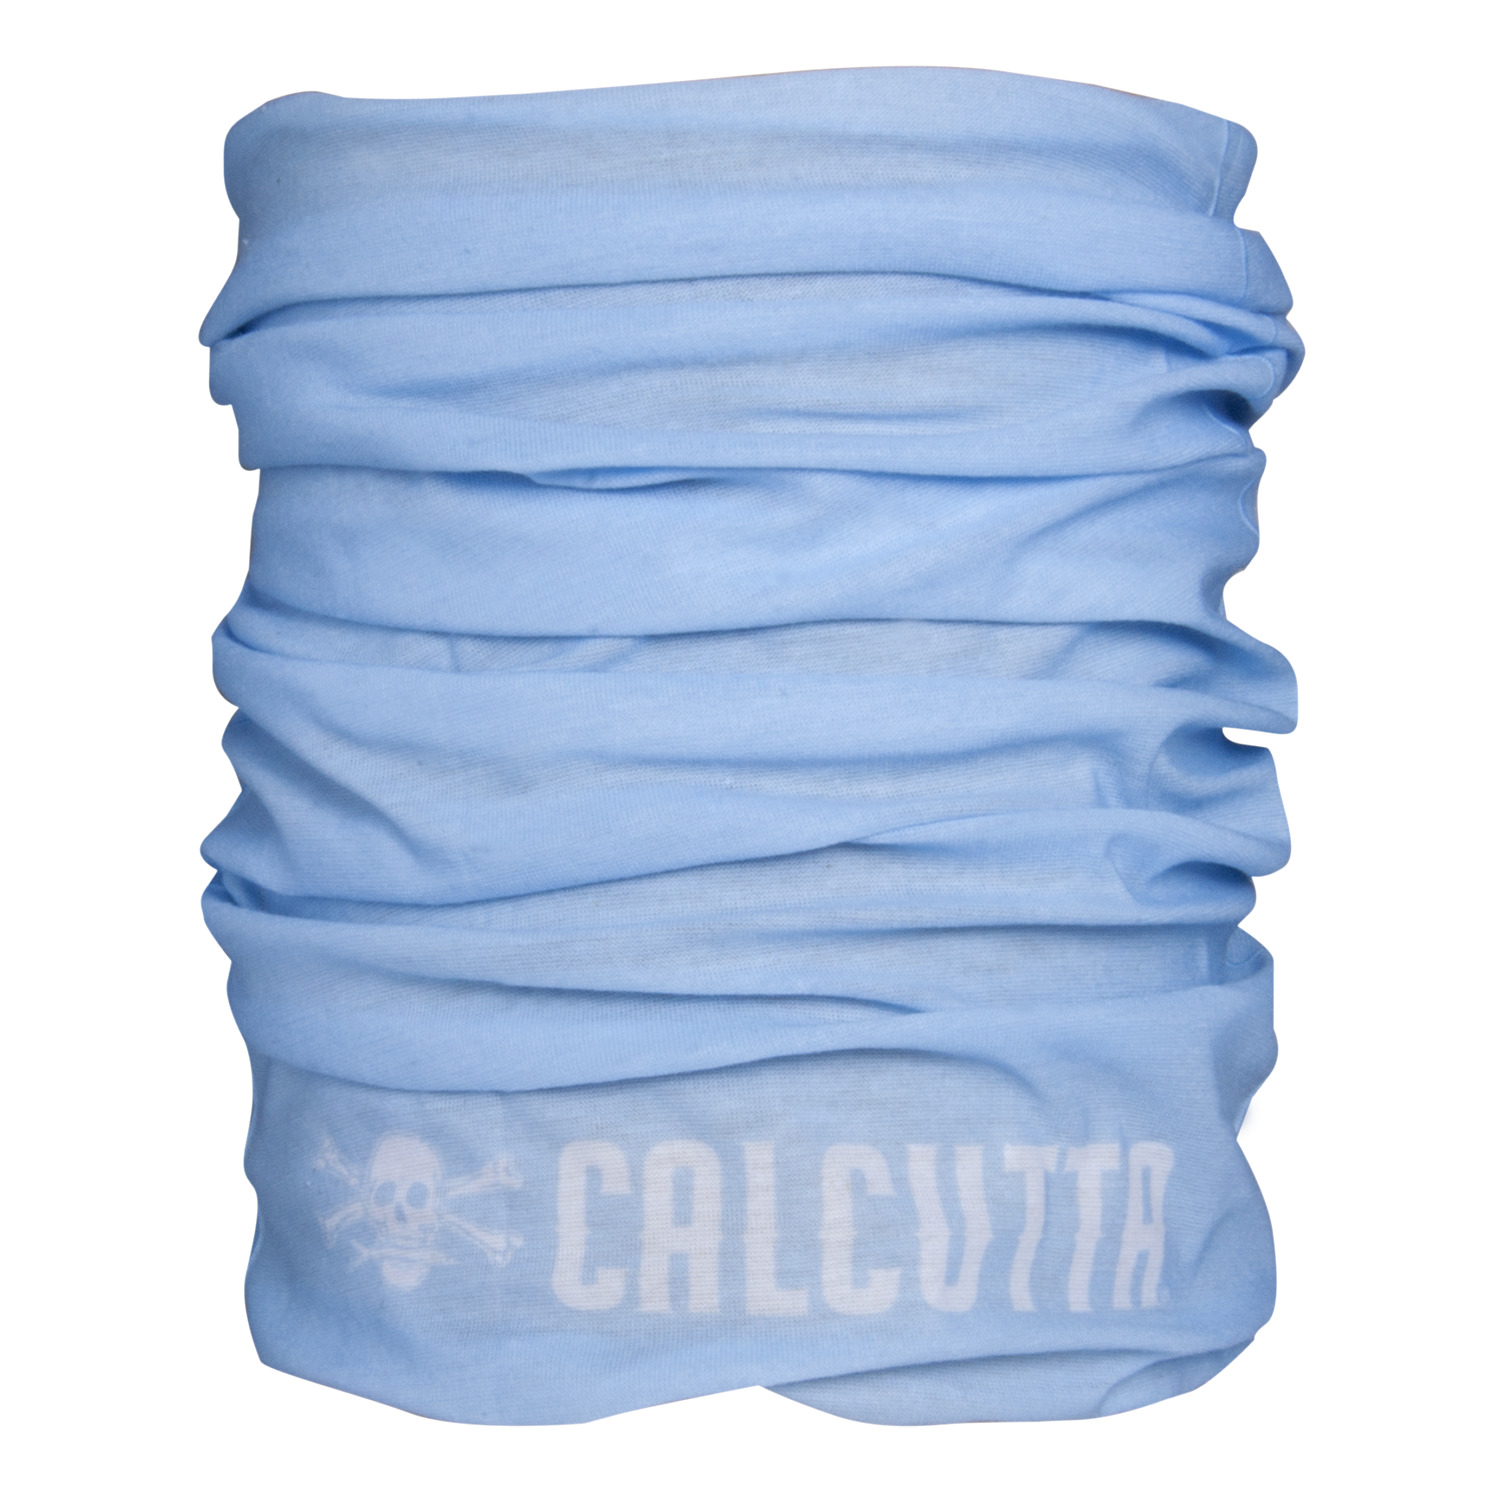 Calcutta CALSC6A Sky Blue Sun Catcher, Sublimated, One Size